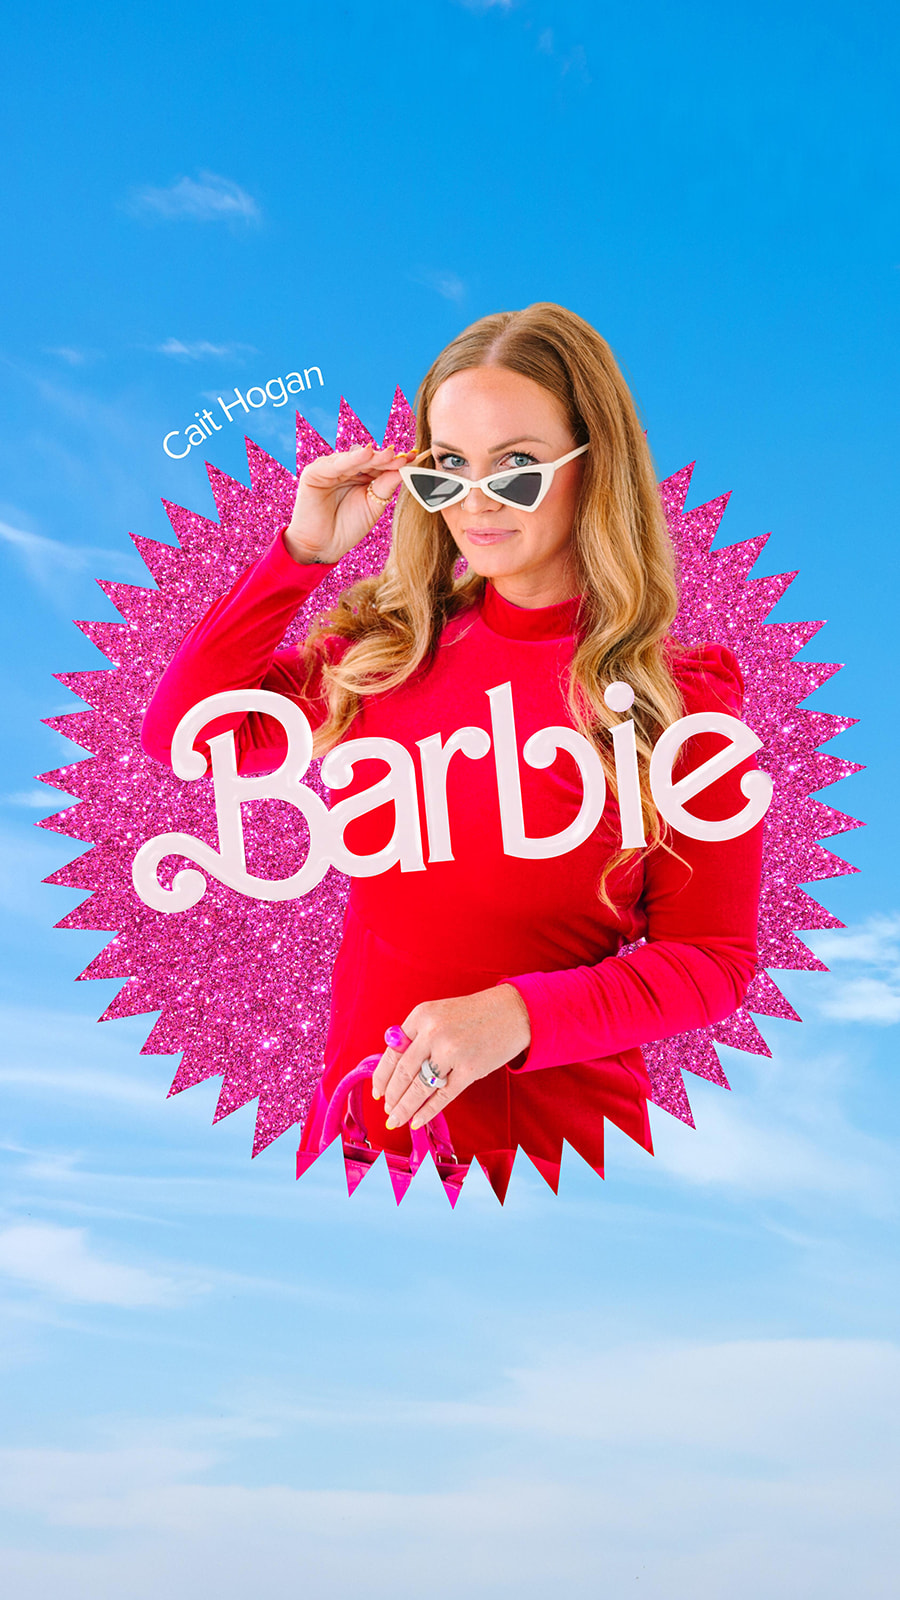 barbenhiemer barbie dress up studio photoshoot hyde house tampa